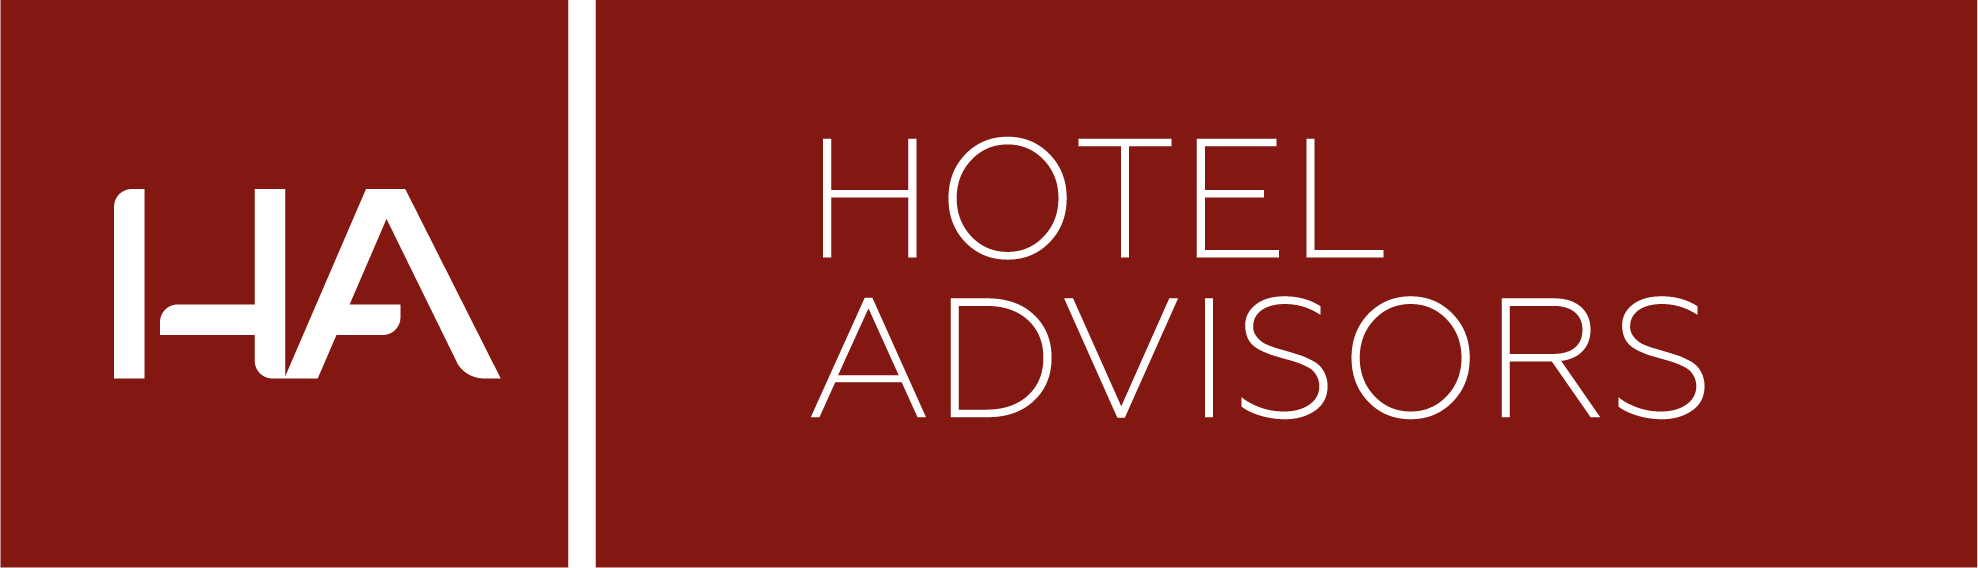 Hotel Advisors